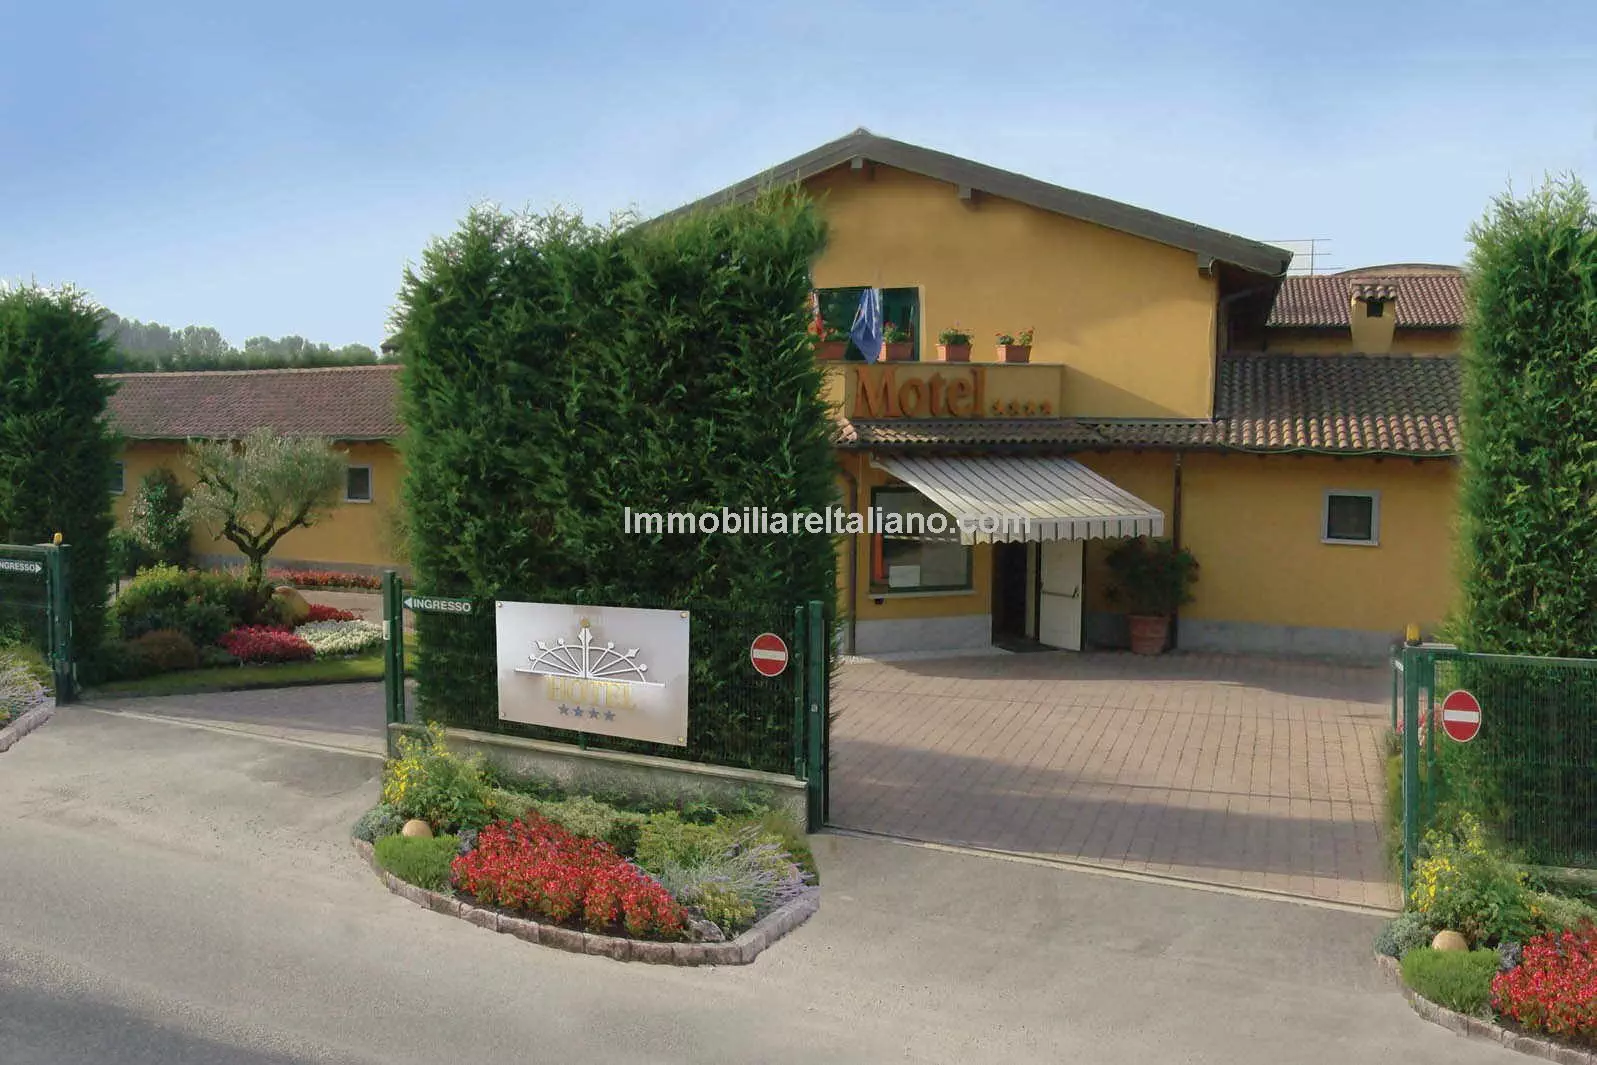 Hotel For Sale Near Milan